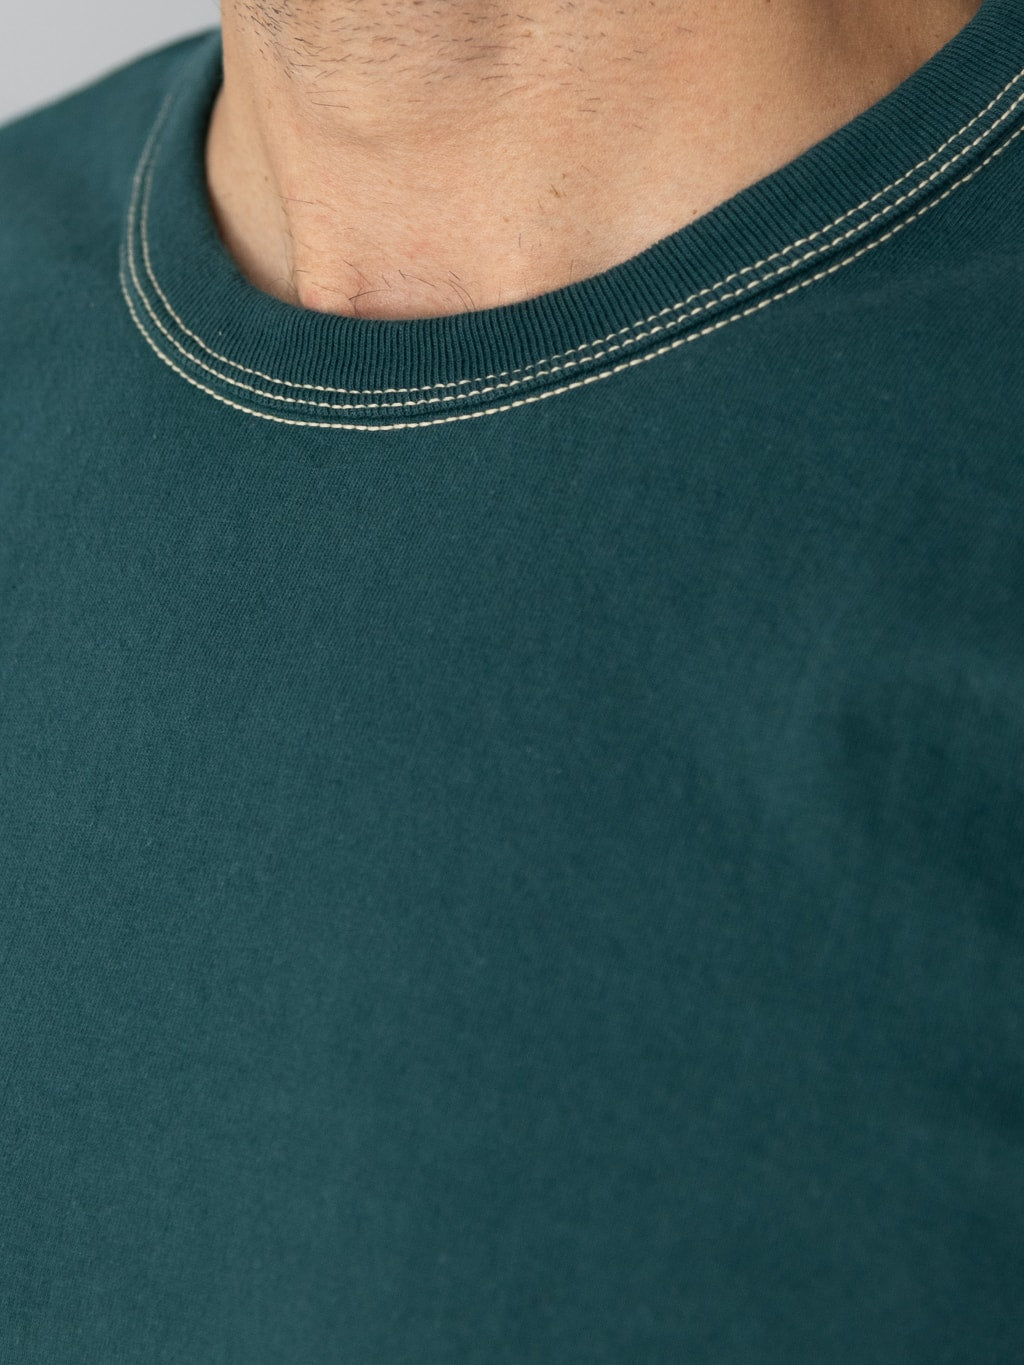 The Flat Head Plain Heavyweight TShirt Dark Green collar closeup